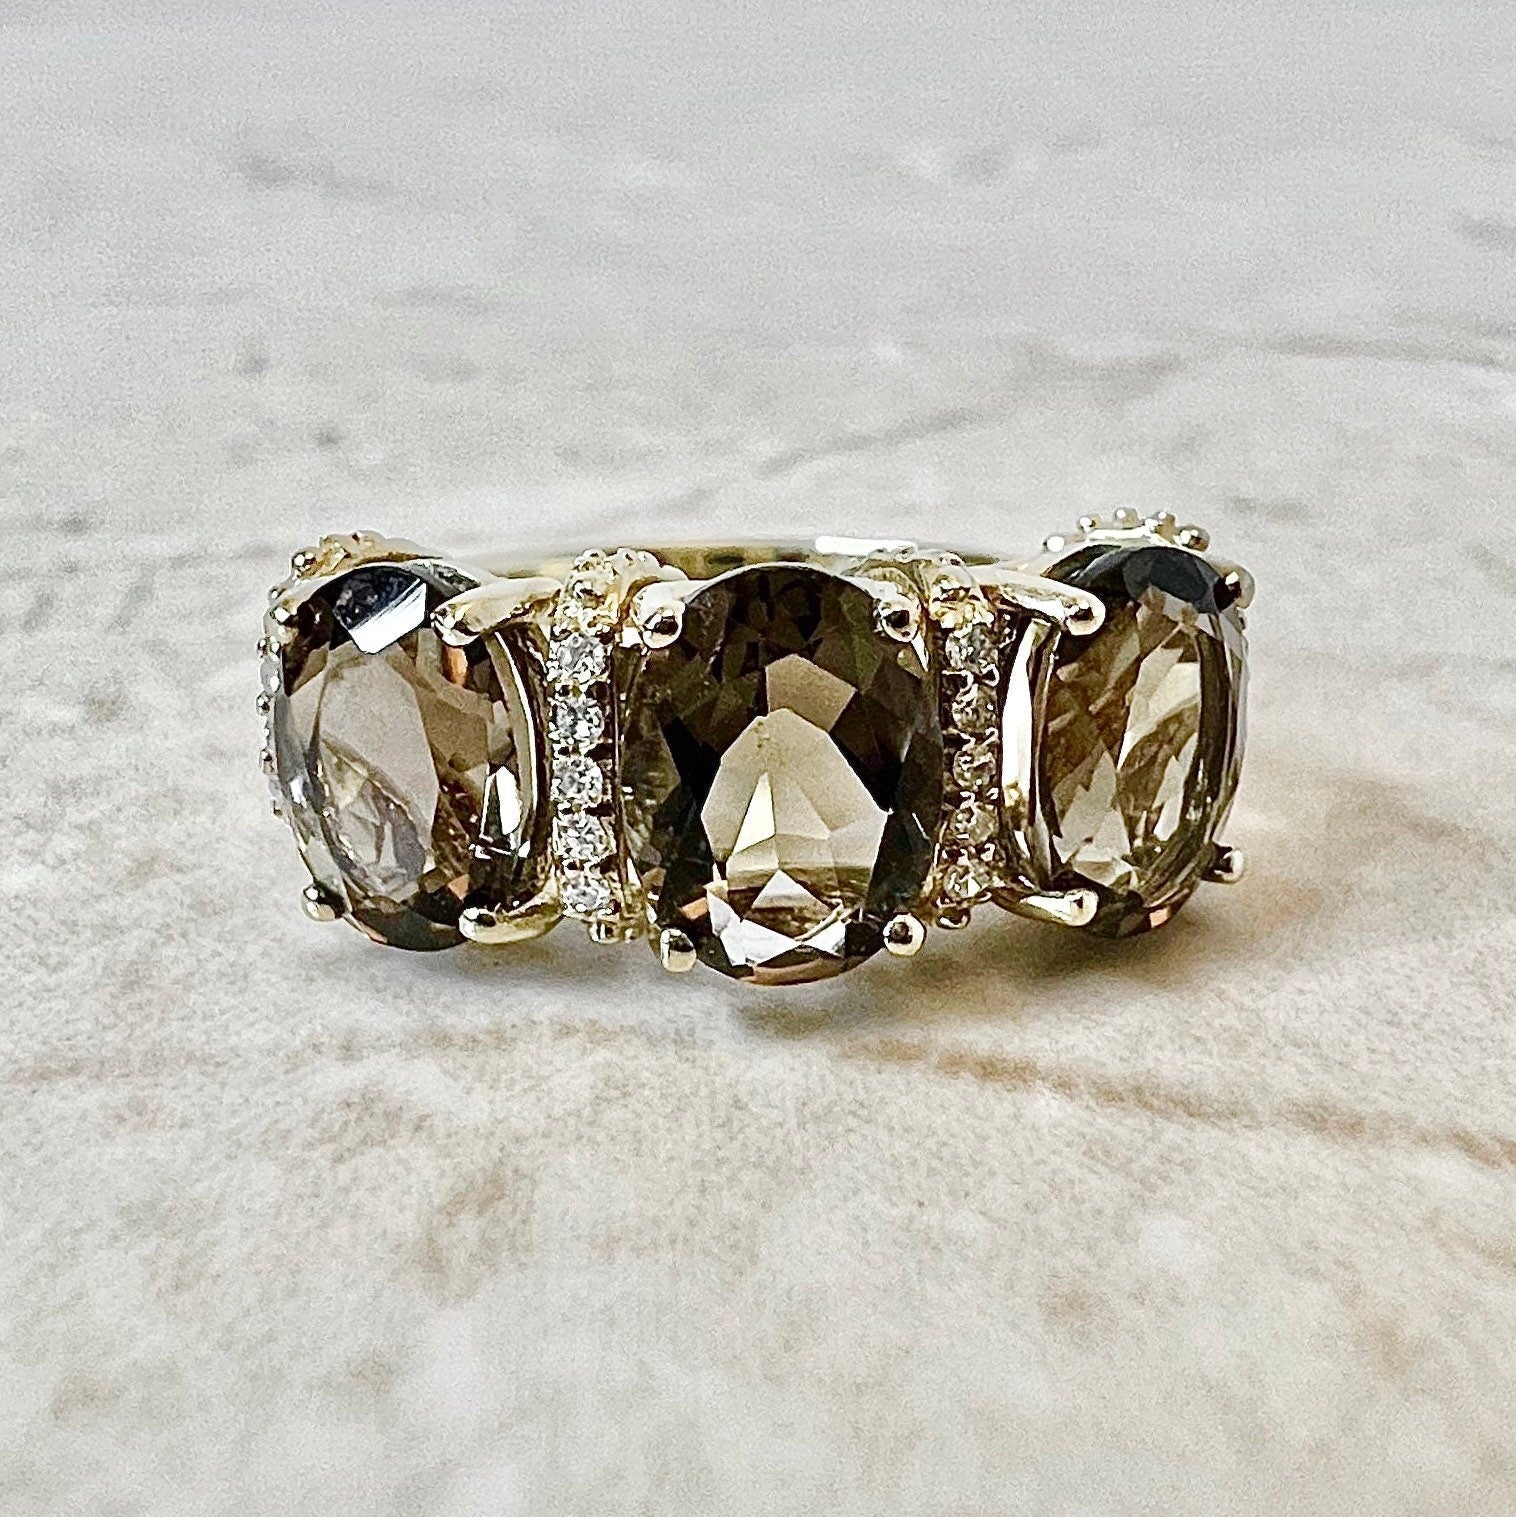 14K Oval Smoky Quartz & Diamond Cocktail Ring - Yellow Gold Three Stone Ring - June Birthstone - Gold Smoky Quartz Ring - Birthday Gift